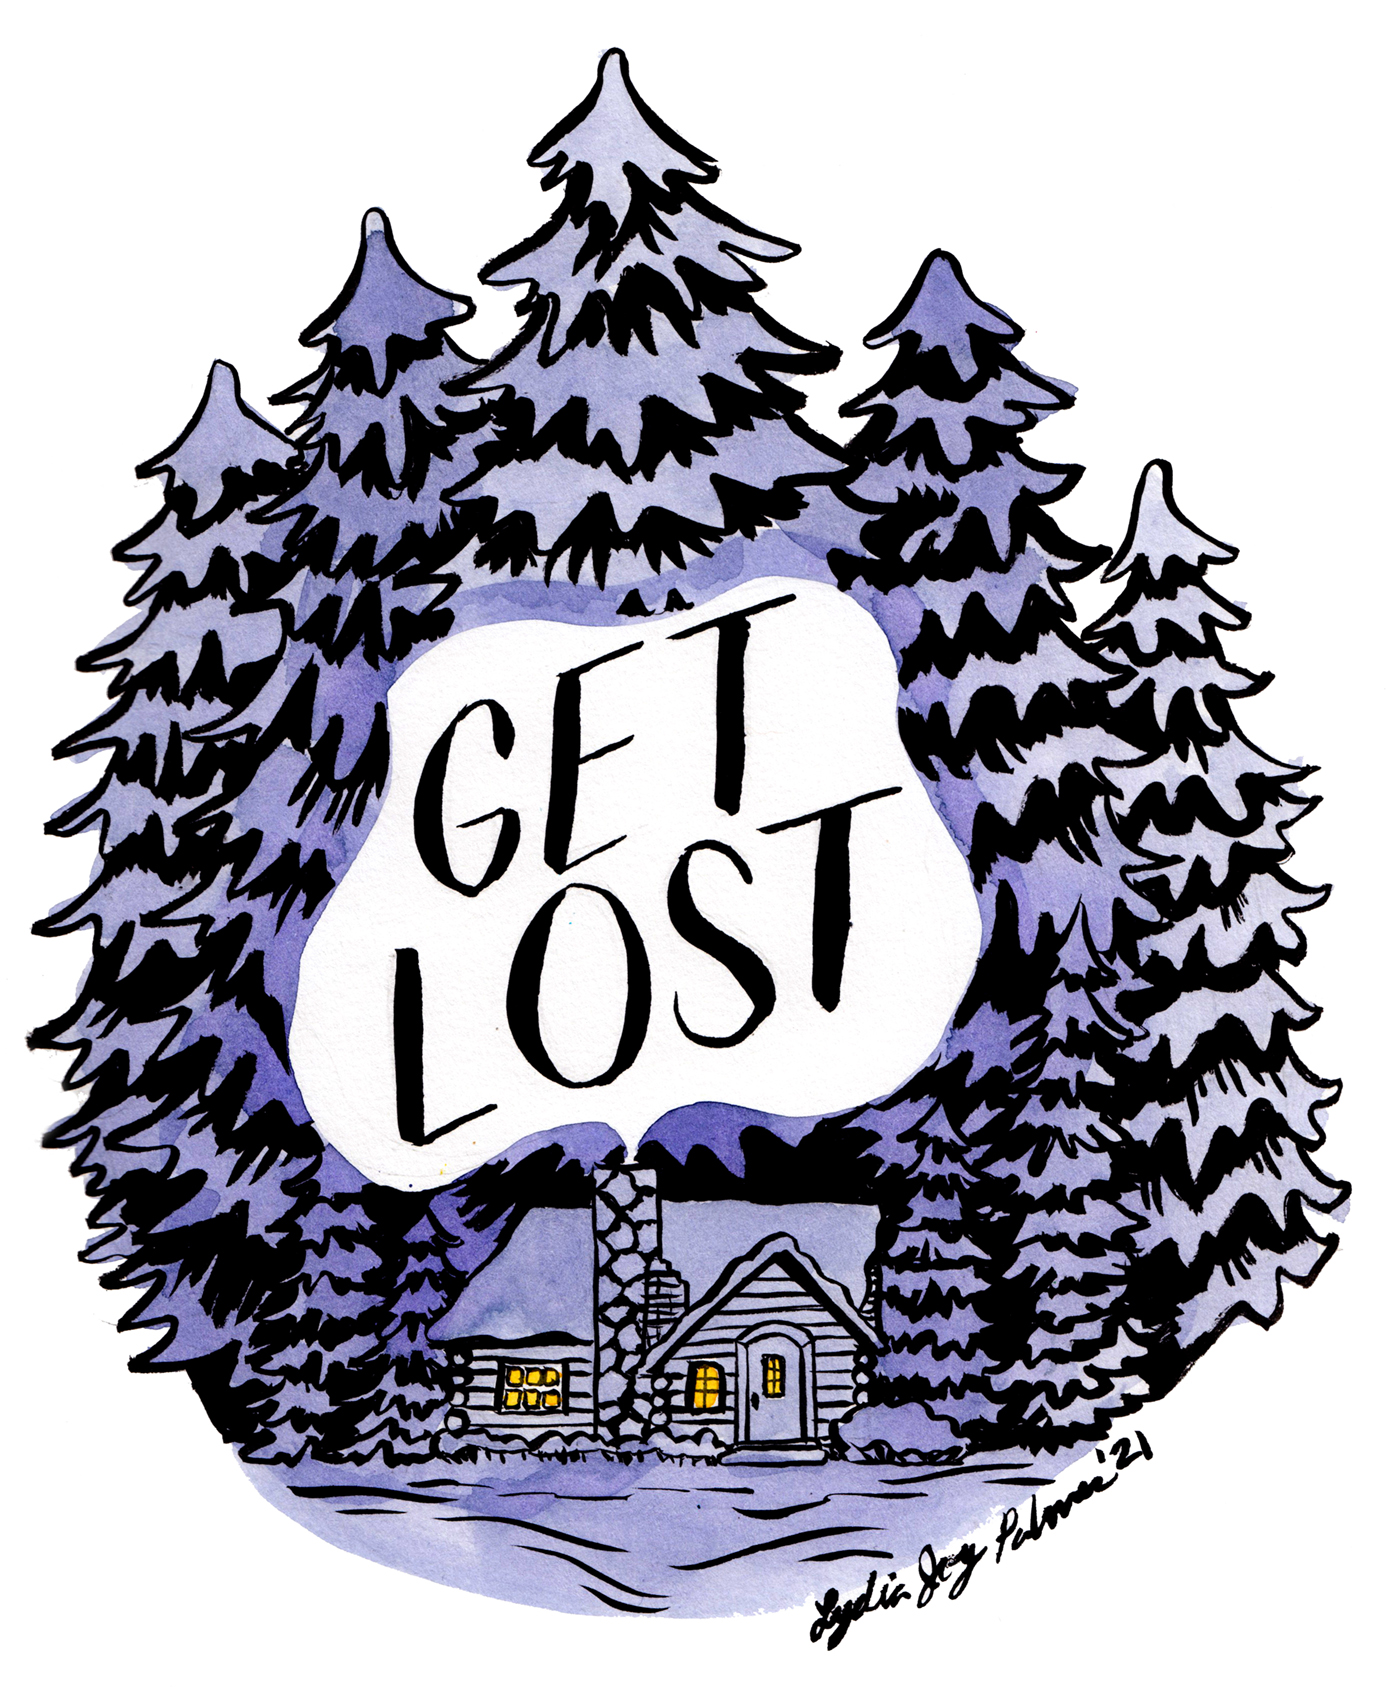 Get Lost Illustration